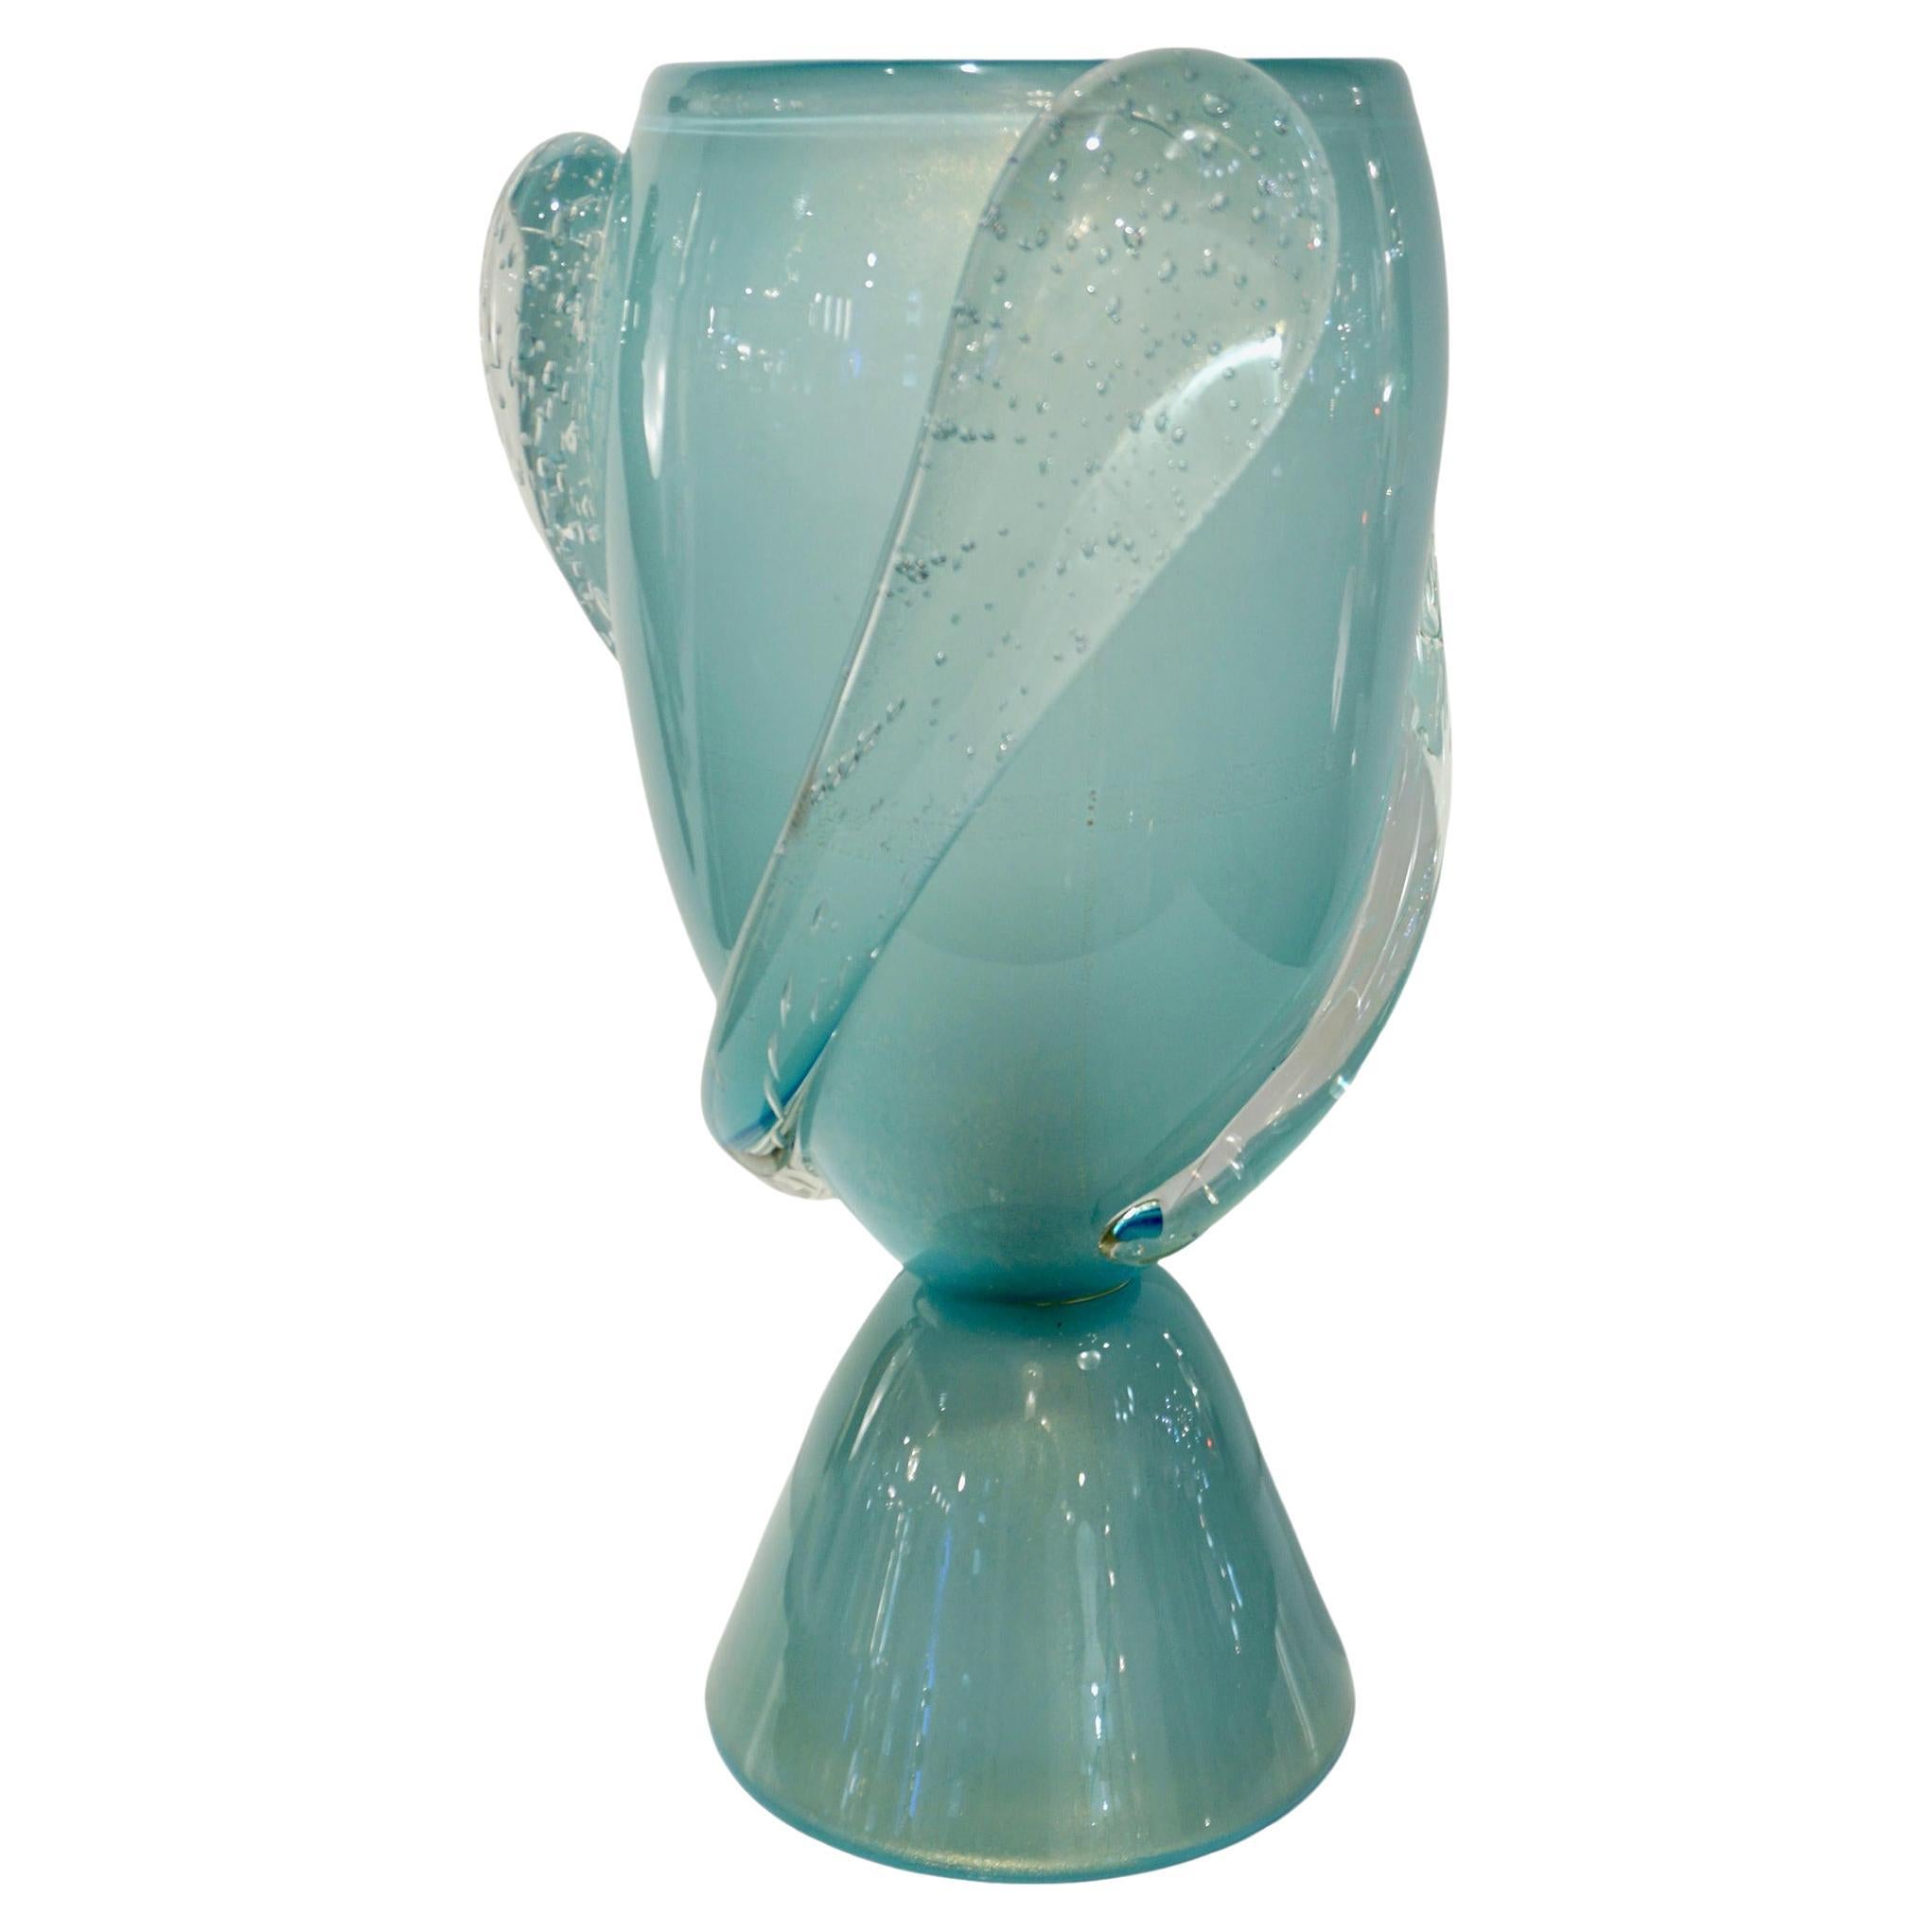 Barovier Toso Lampe organique en verre de Murano bleu aqua, contemporaine et moderne italienne en vente